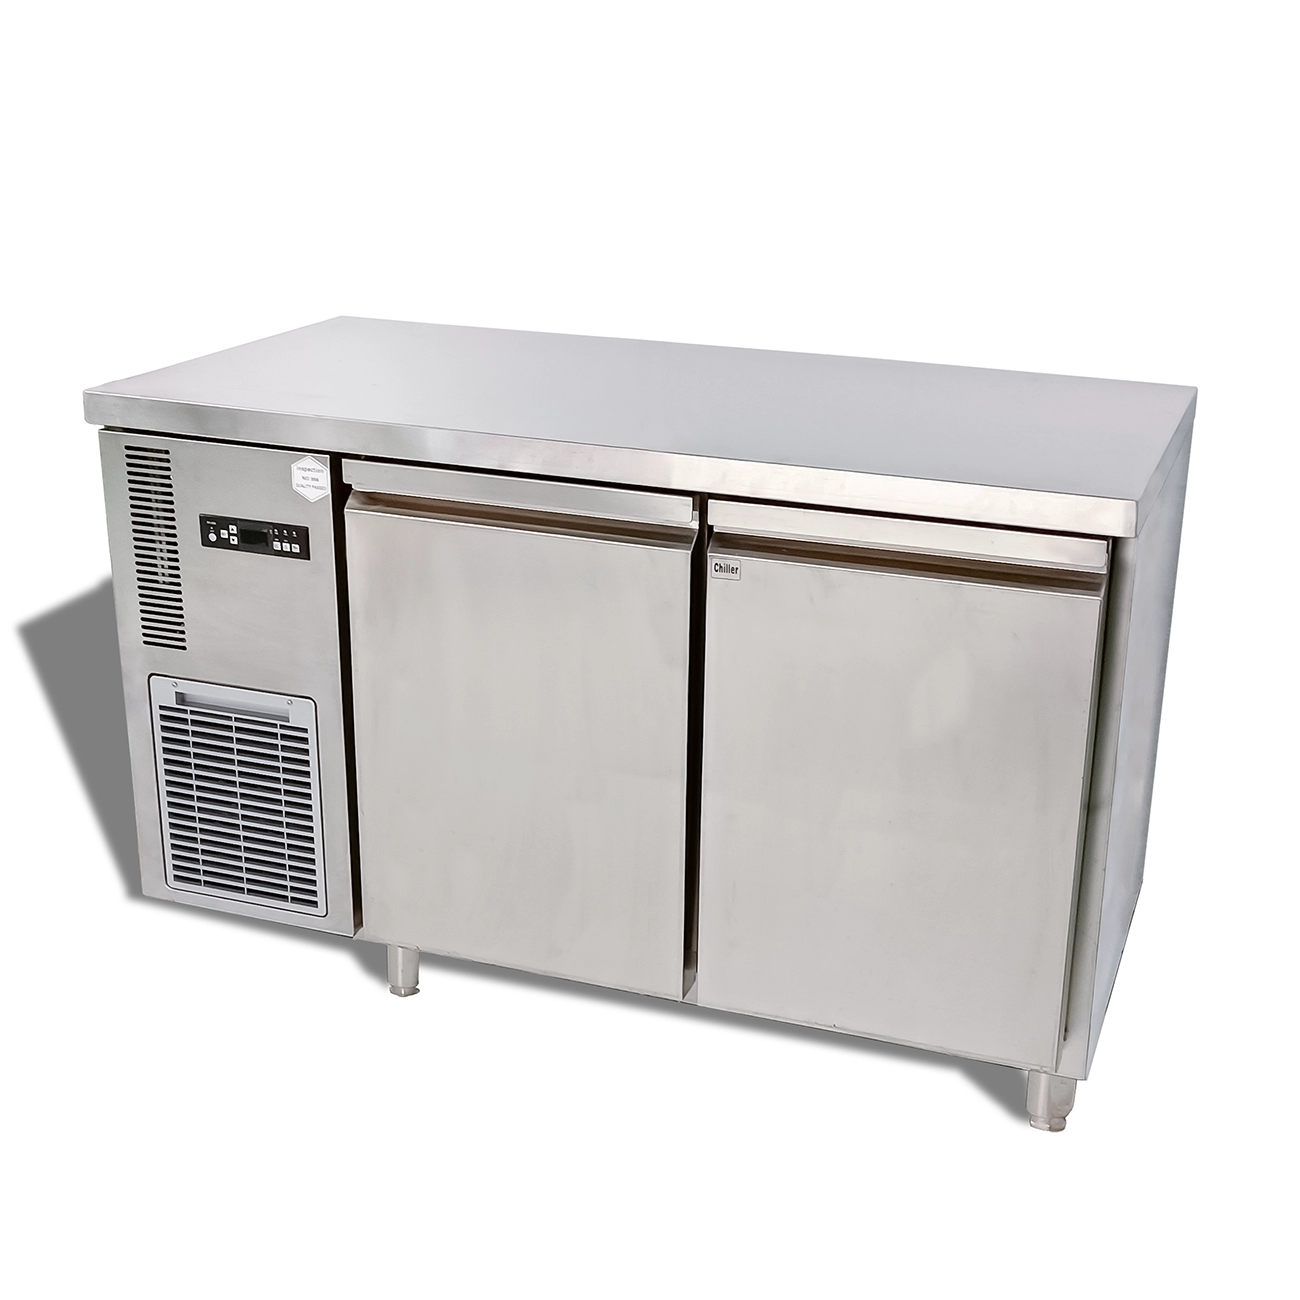 Enfriador de mostrador comercial Refrigerador y enfriador de mostrador